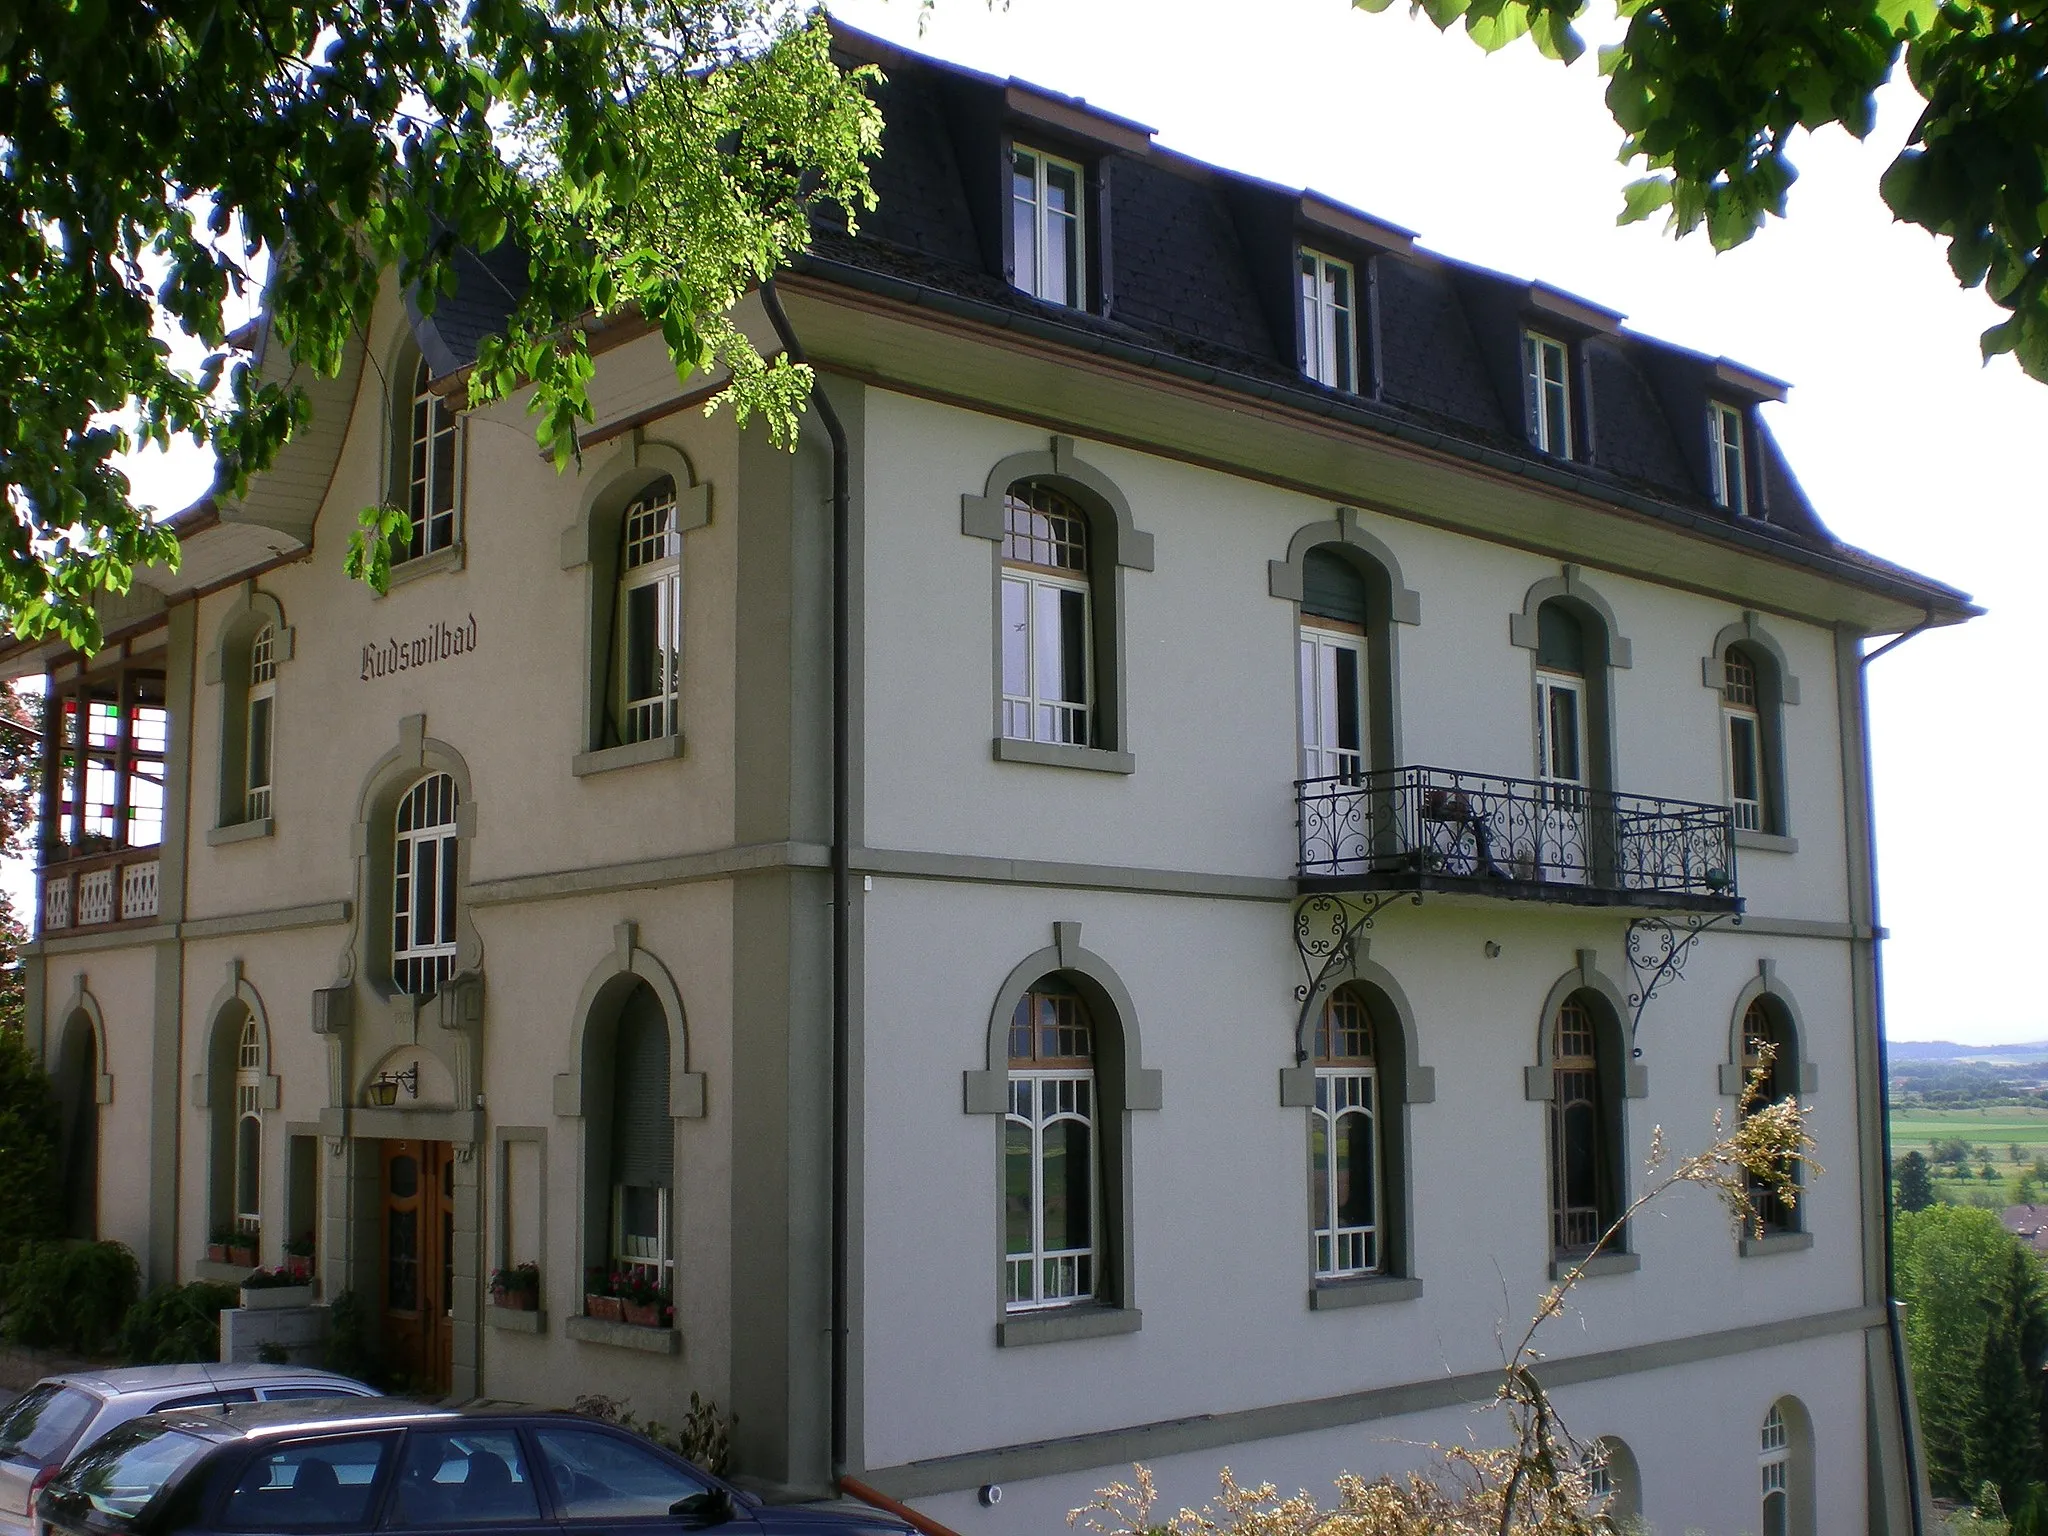 Photo showing: Rudswilbad in Ersigen